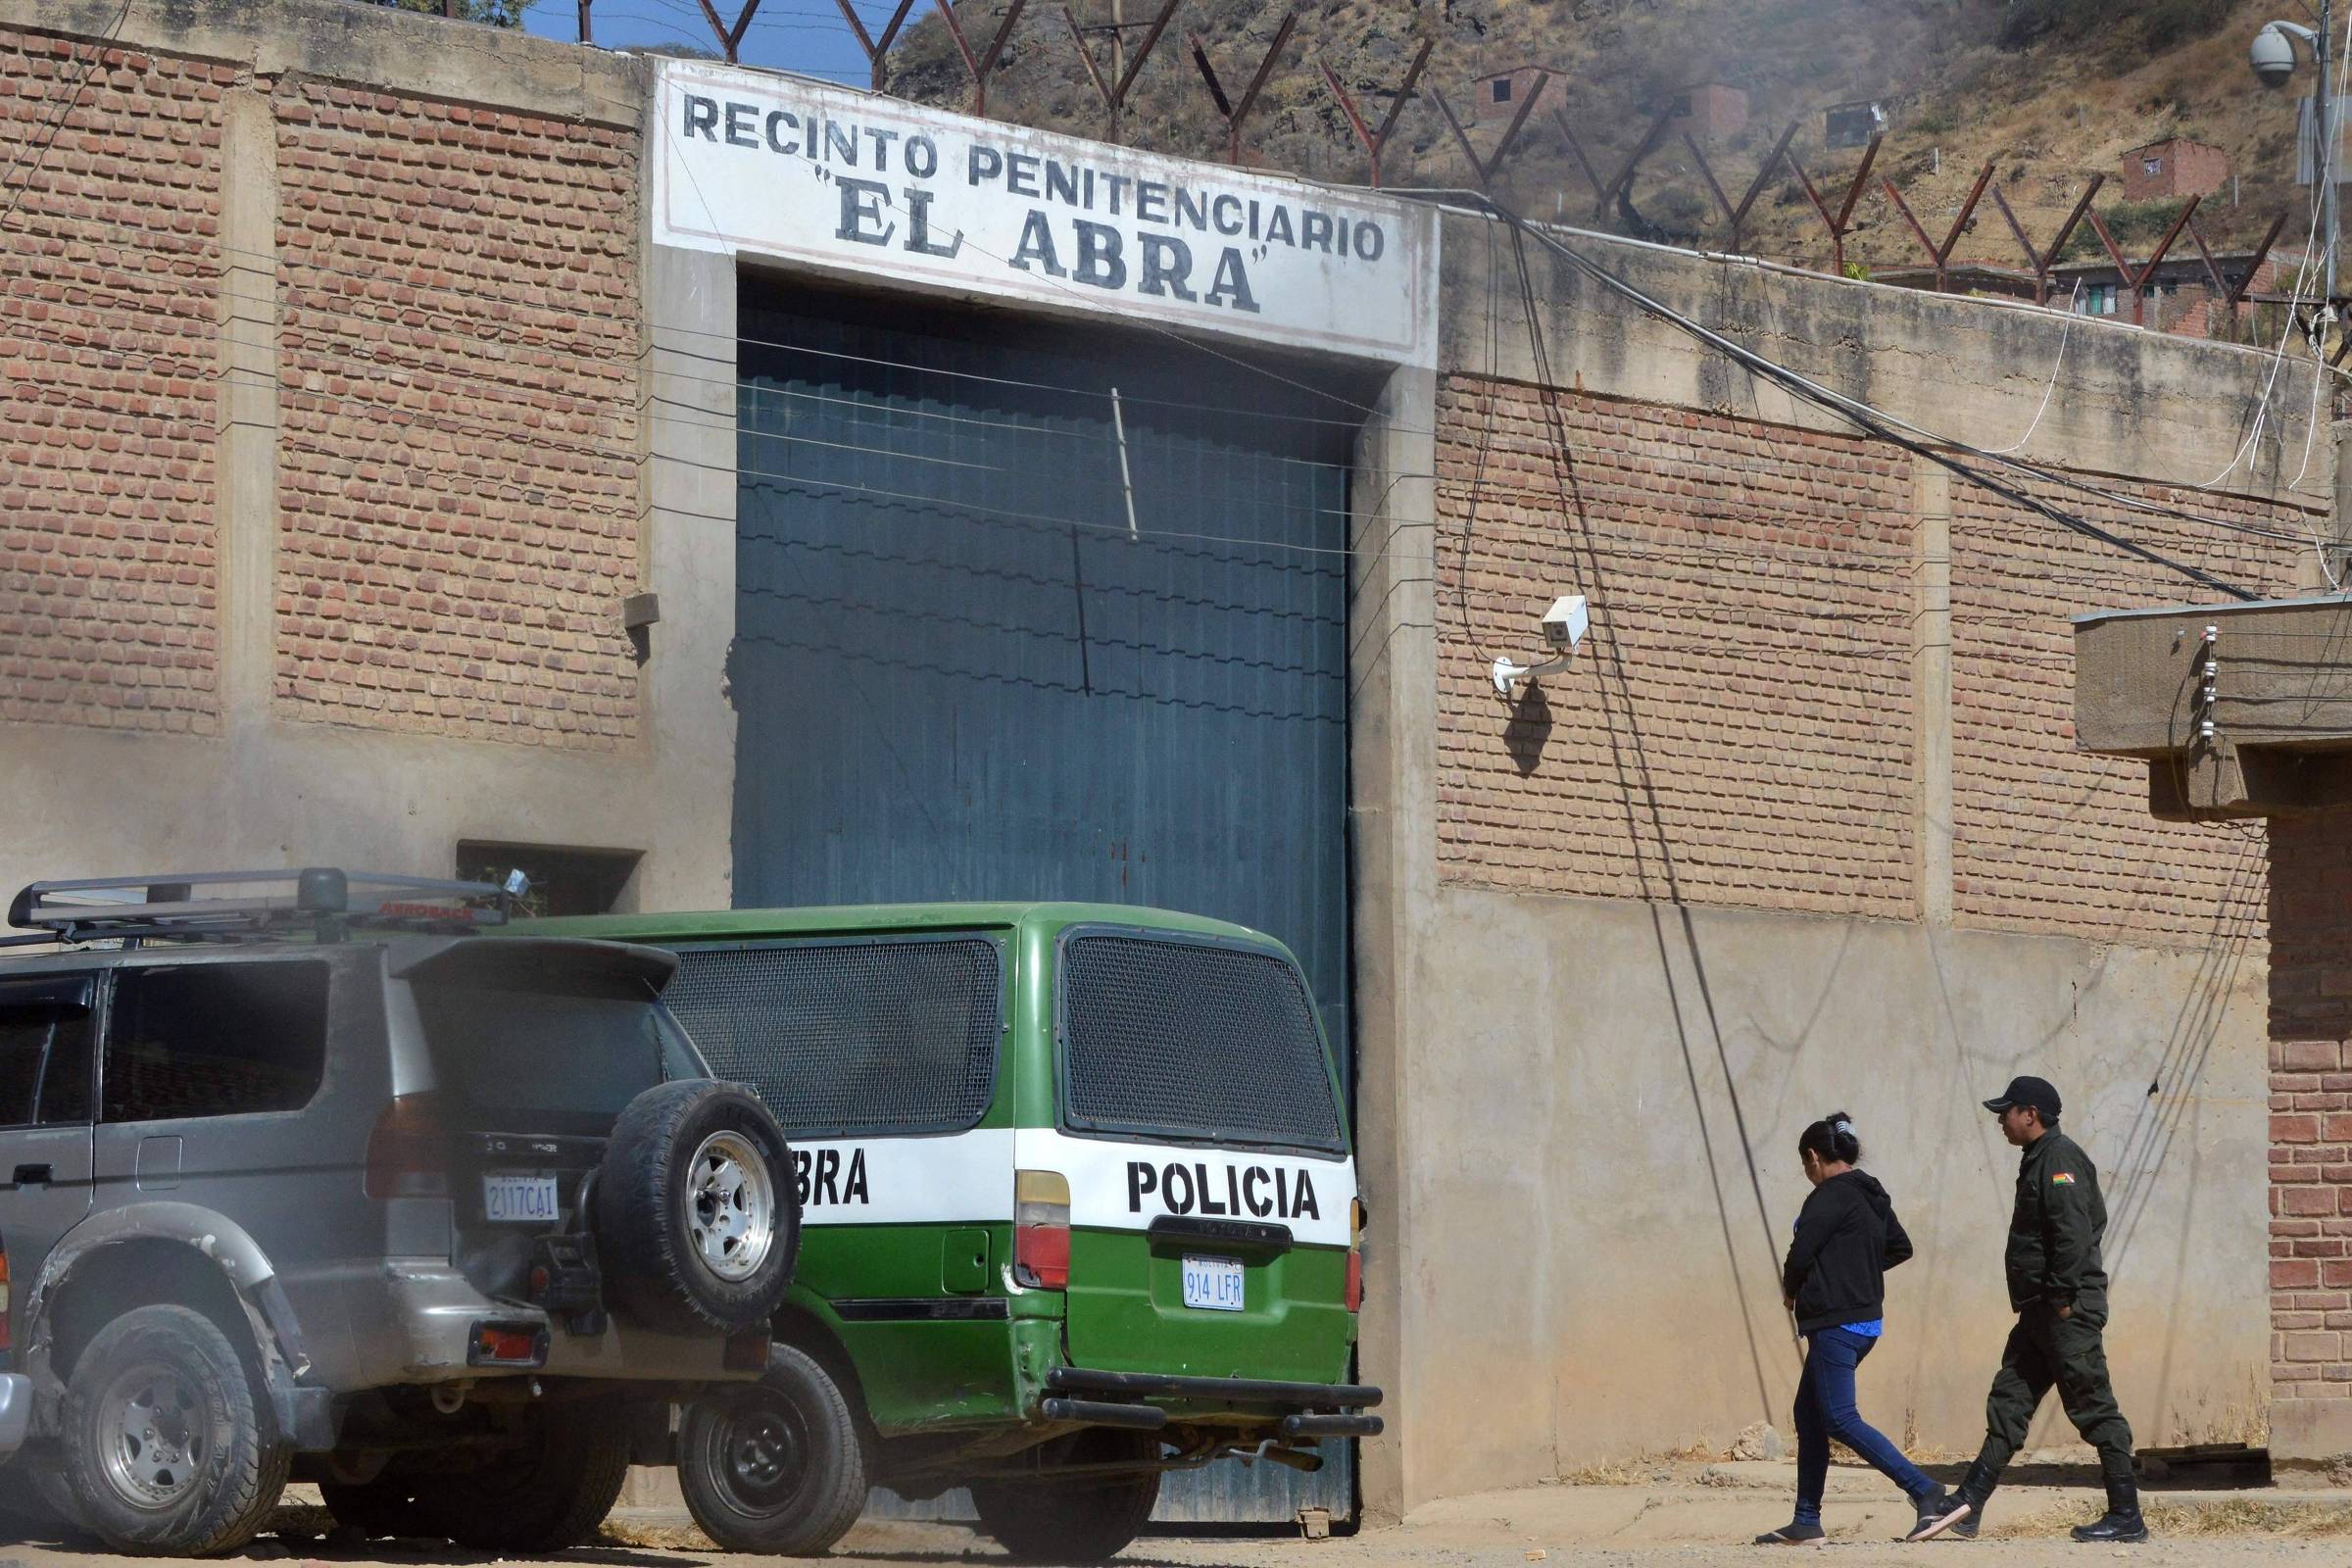 Ministro boliviano acusa general de ordenar tiros contra manifestantes